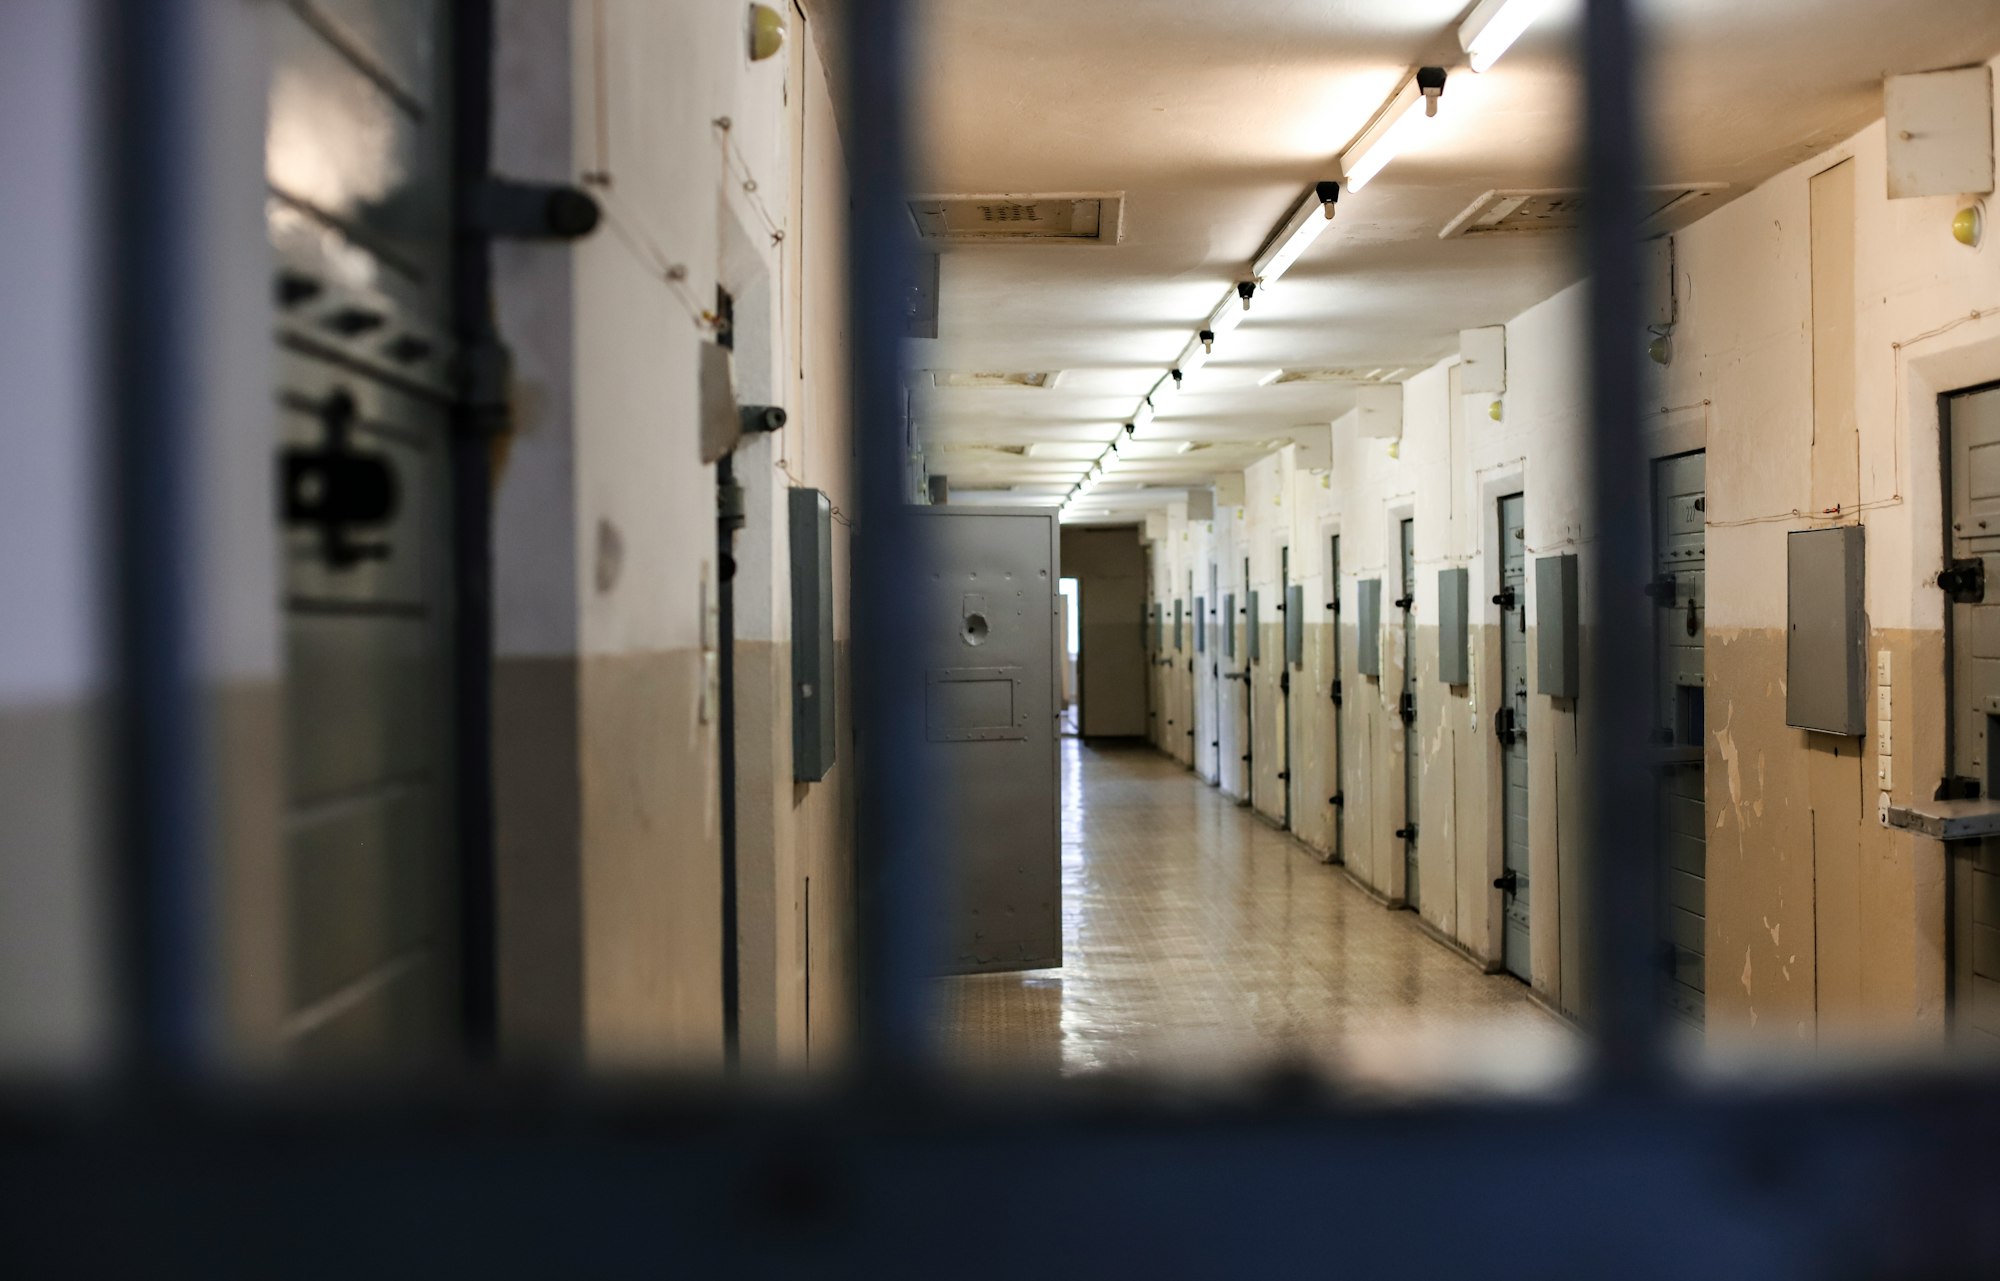 The pressure on Irish prisons thanks to gender identity ideology